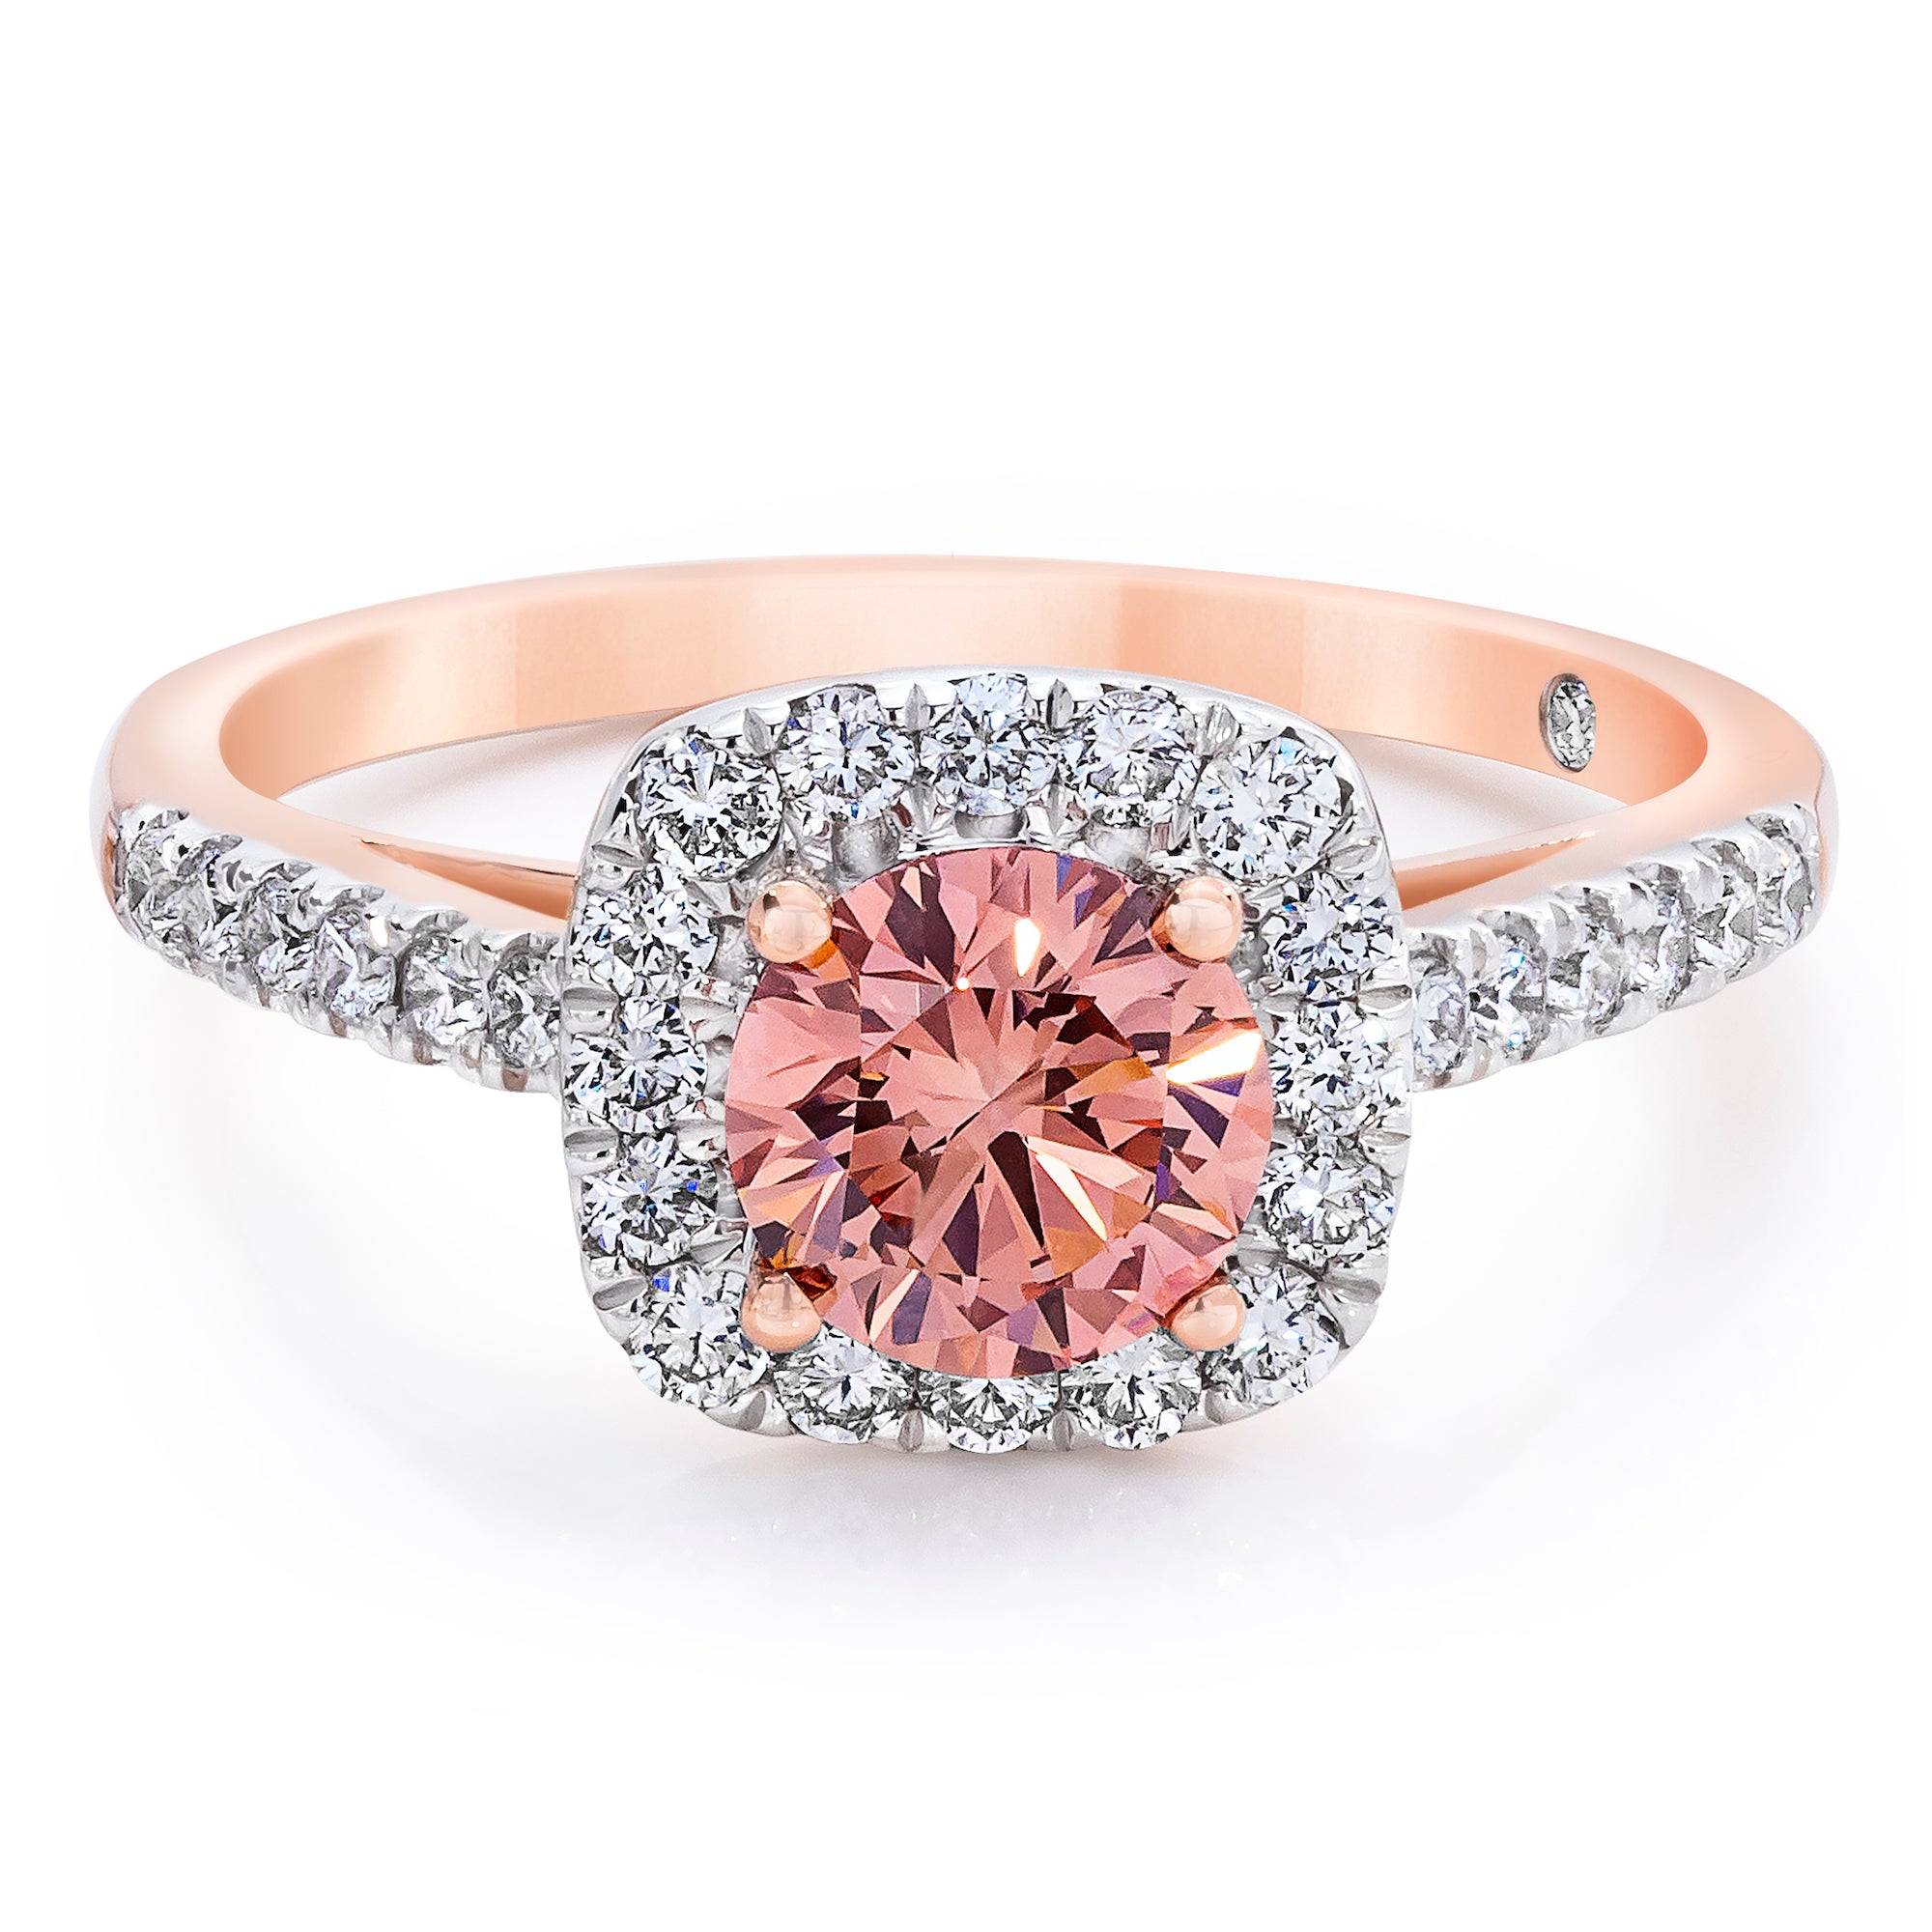 1.50 ctw Pink & White Lab Created Diamond Halo Engagement Ring